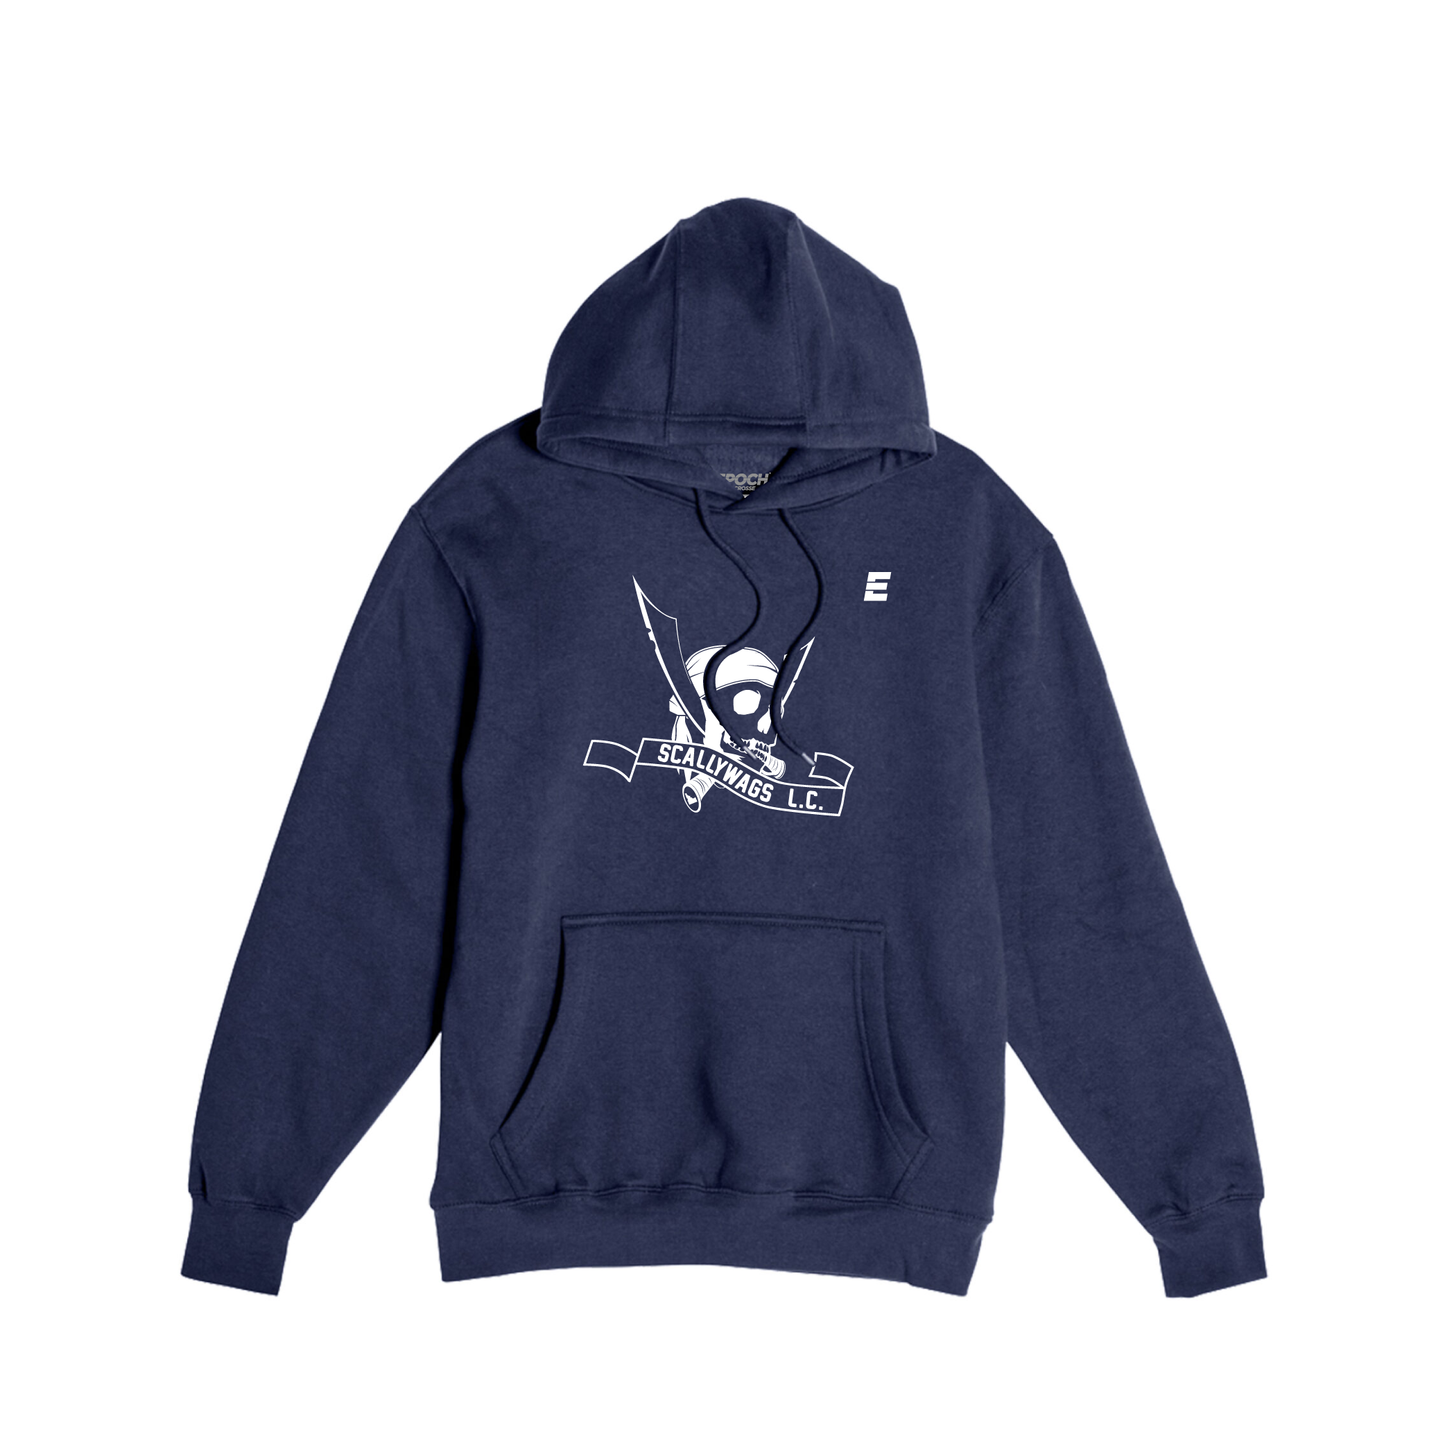 Scallywags Skull - Unisex Hooded Pocket Sweatshirt Navy